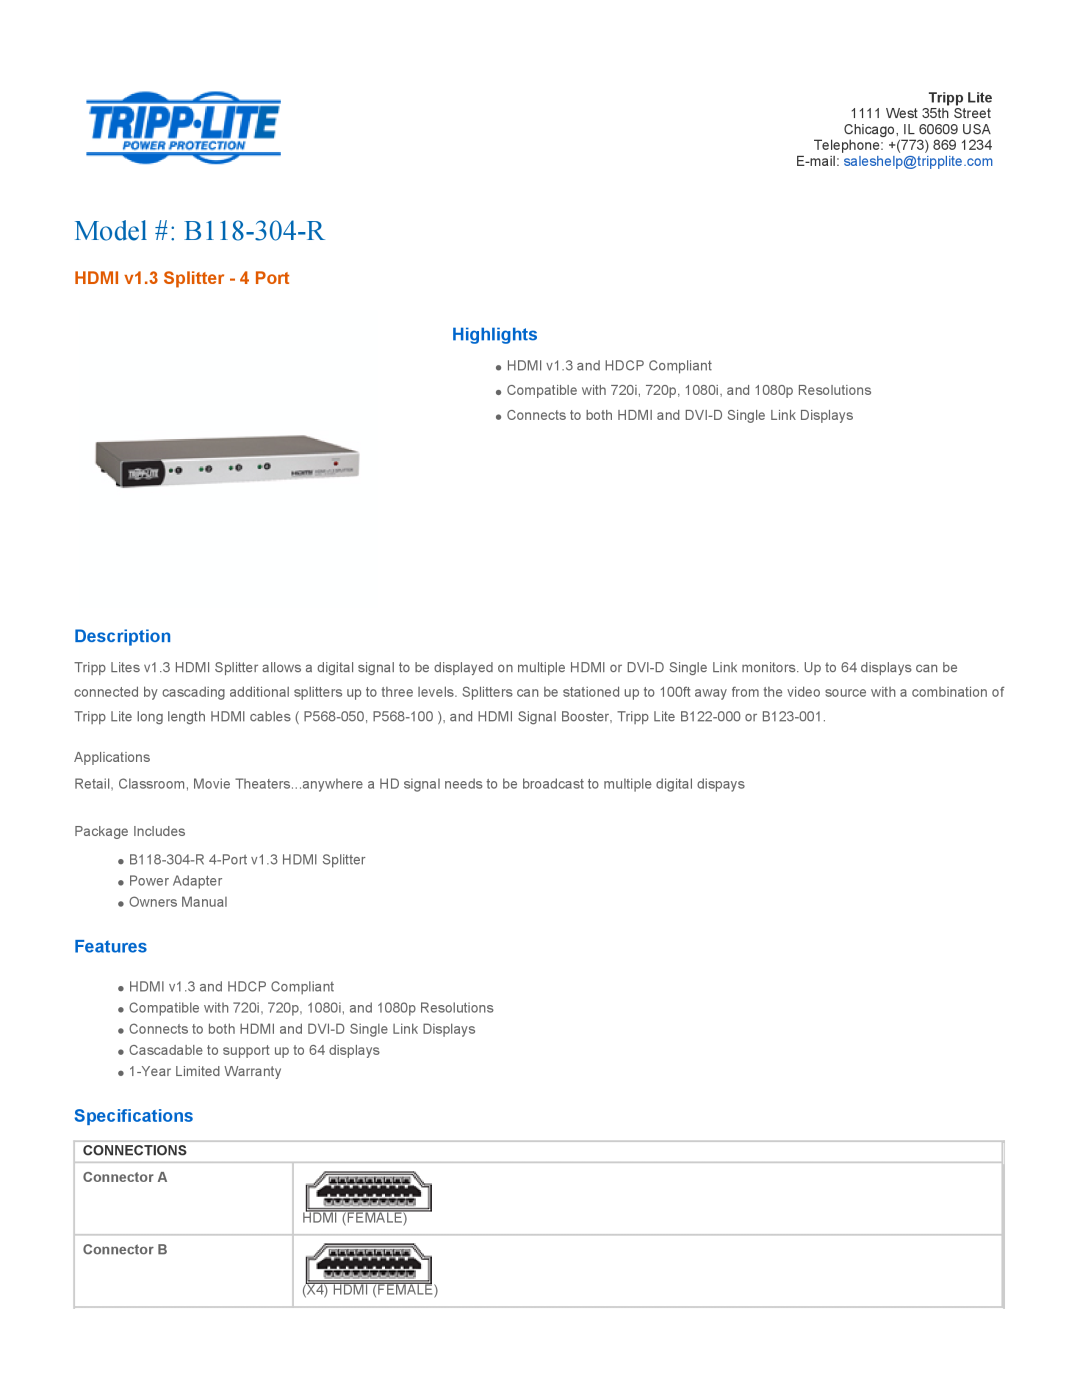 Tripp Lite specifications Connector A, Connector B, Model # B118-304-R, HDMI v1.3 Splitter - 4 Port, Highlights 